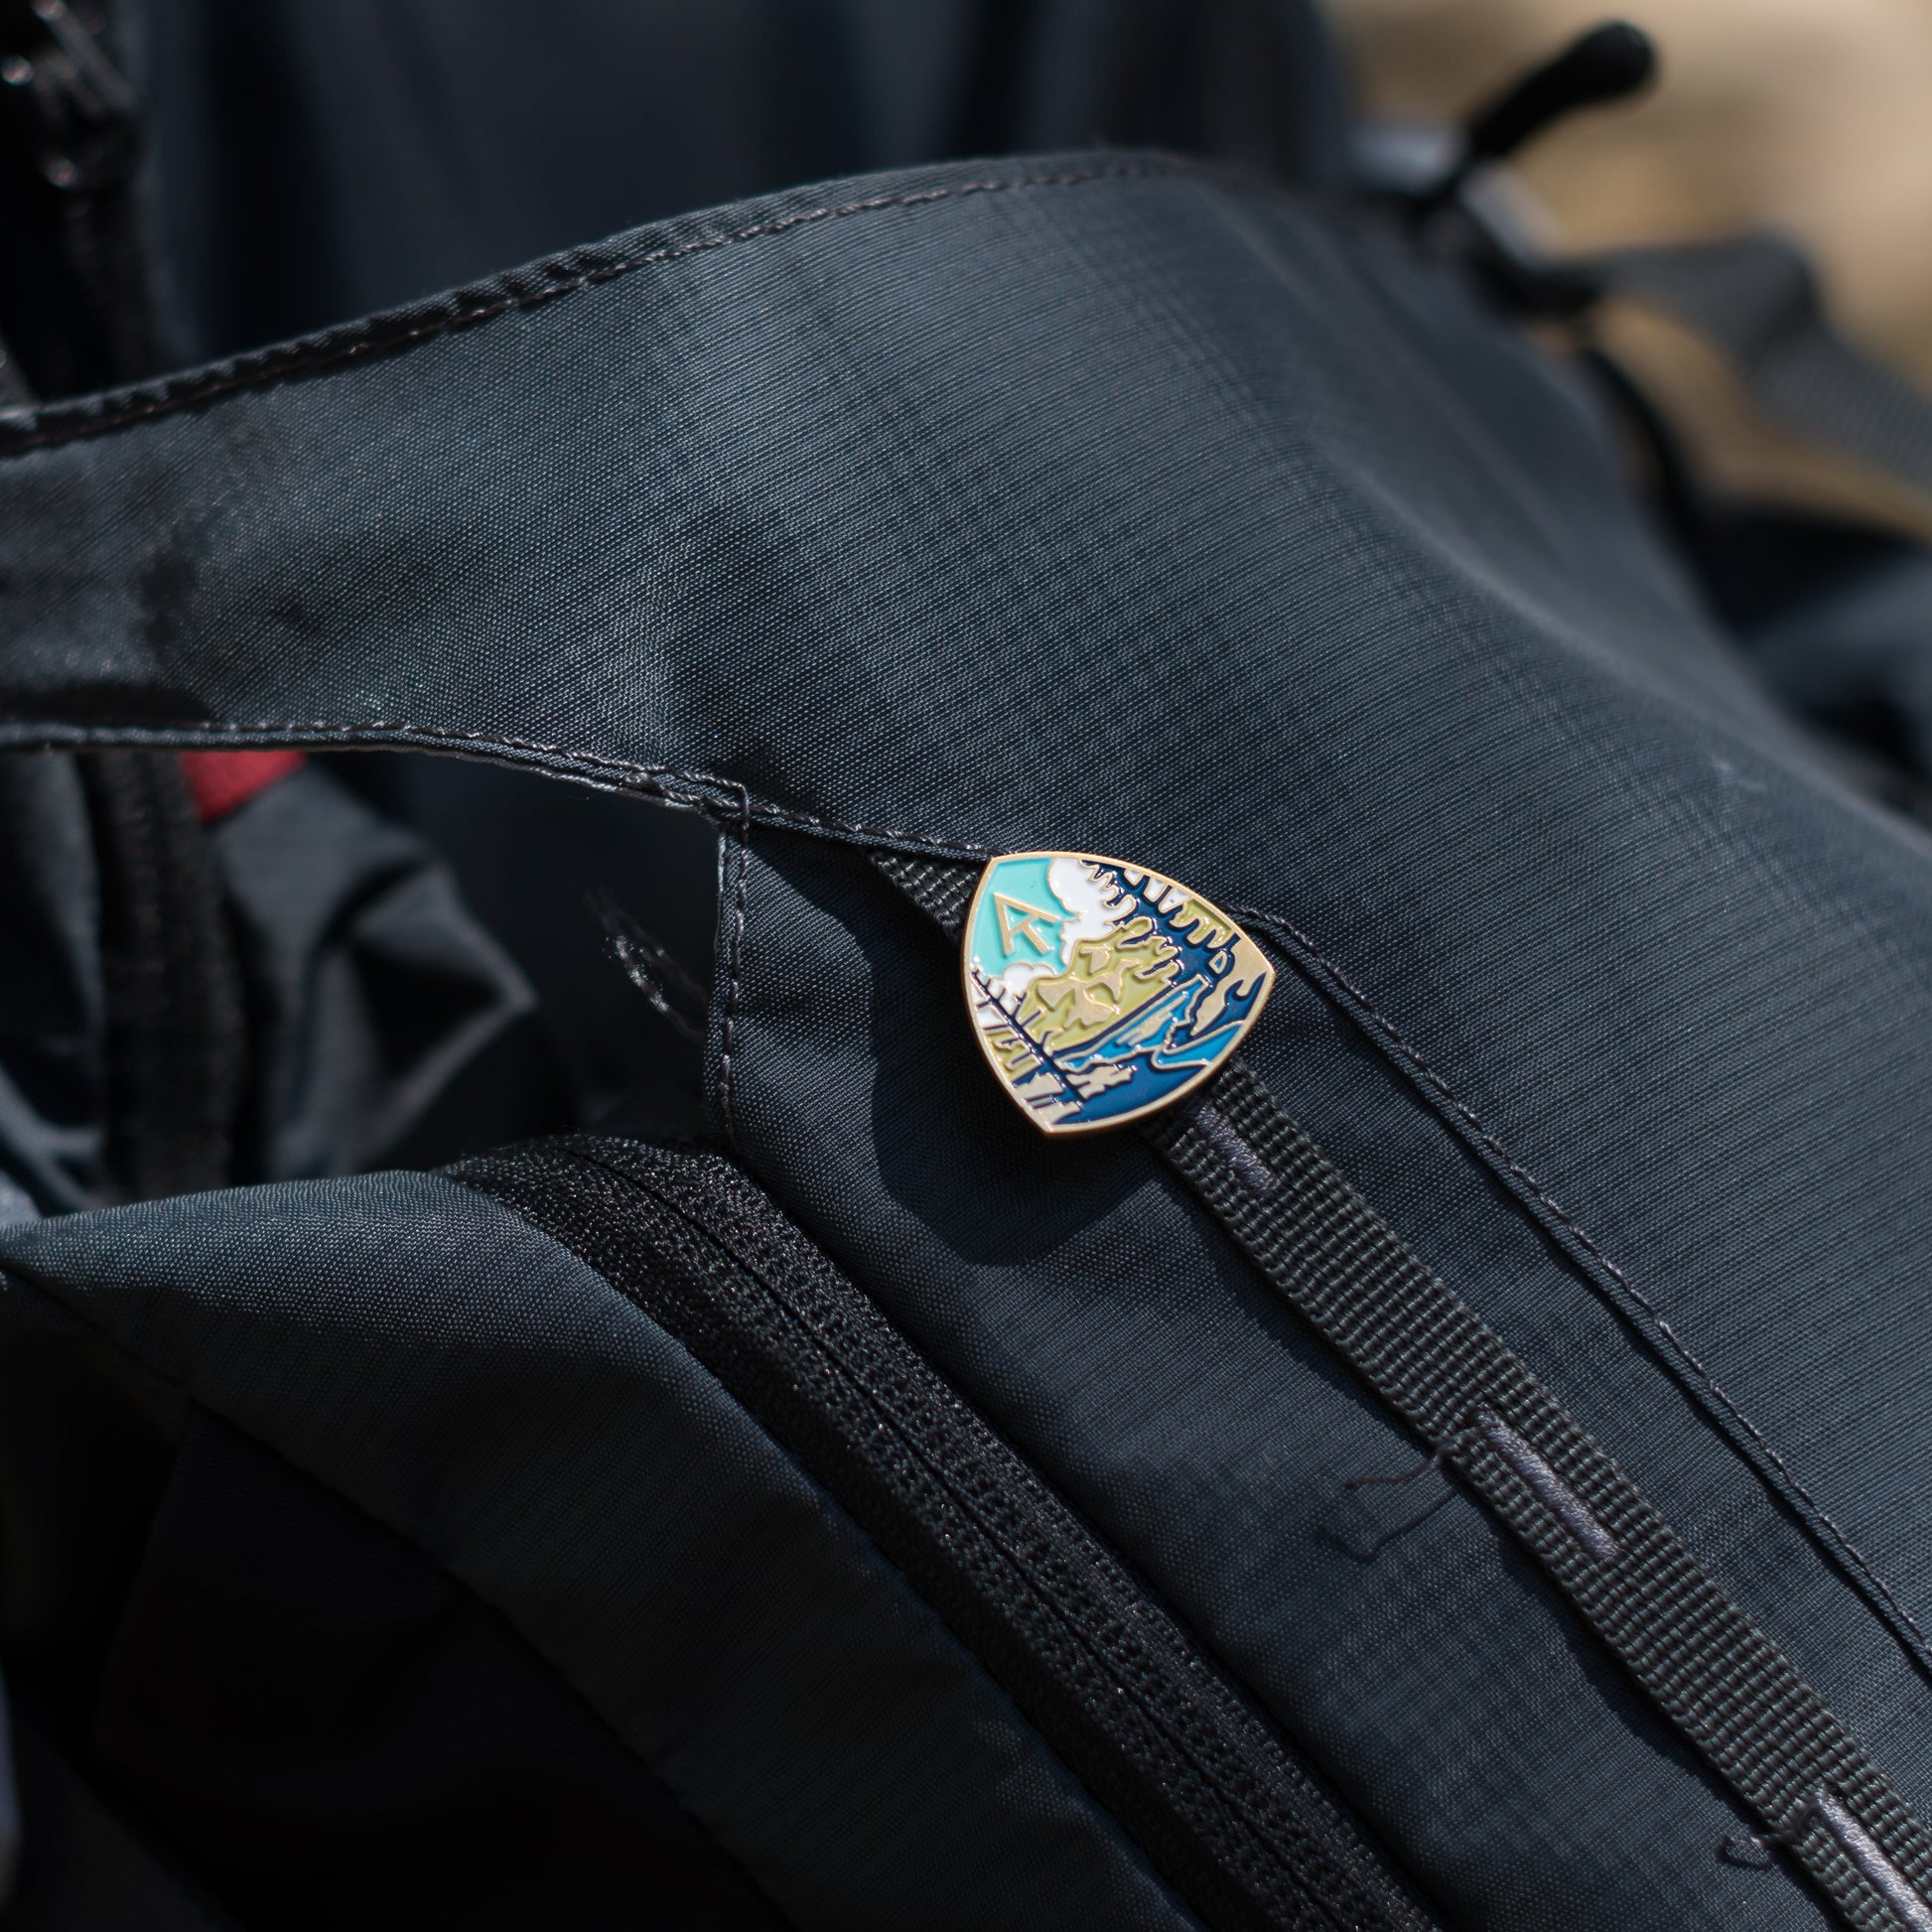 Appalachian Trail enamel pin on bag